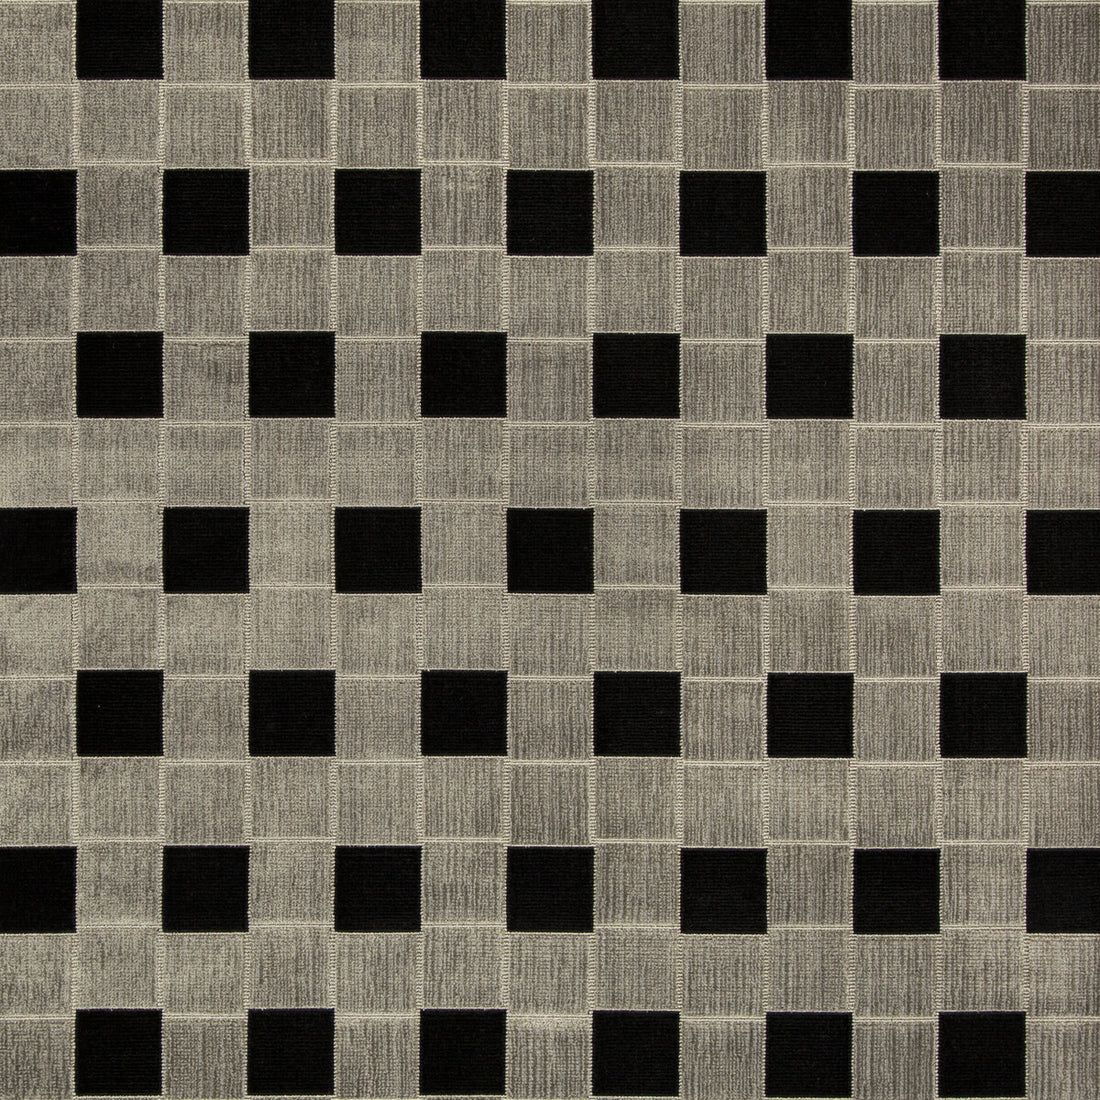 Truss fabric in ebony color - pattern GWF-3757.118.0 - by Lee Jofa Modern in the Kelly Wearstler V collection